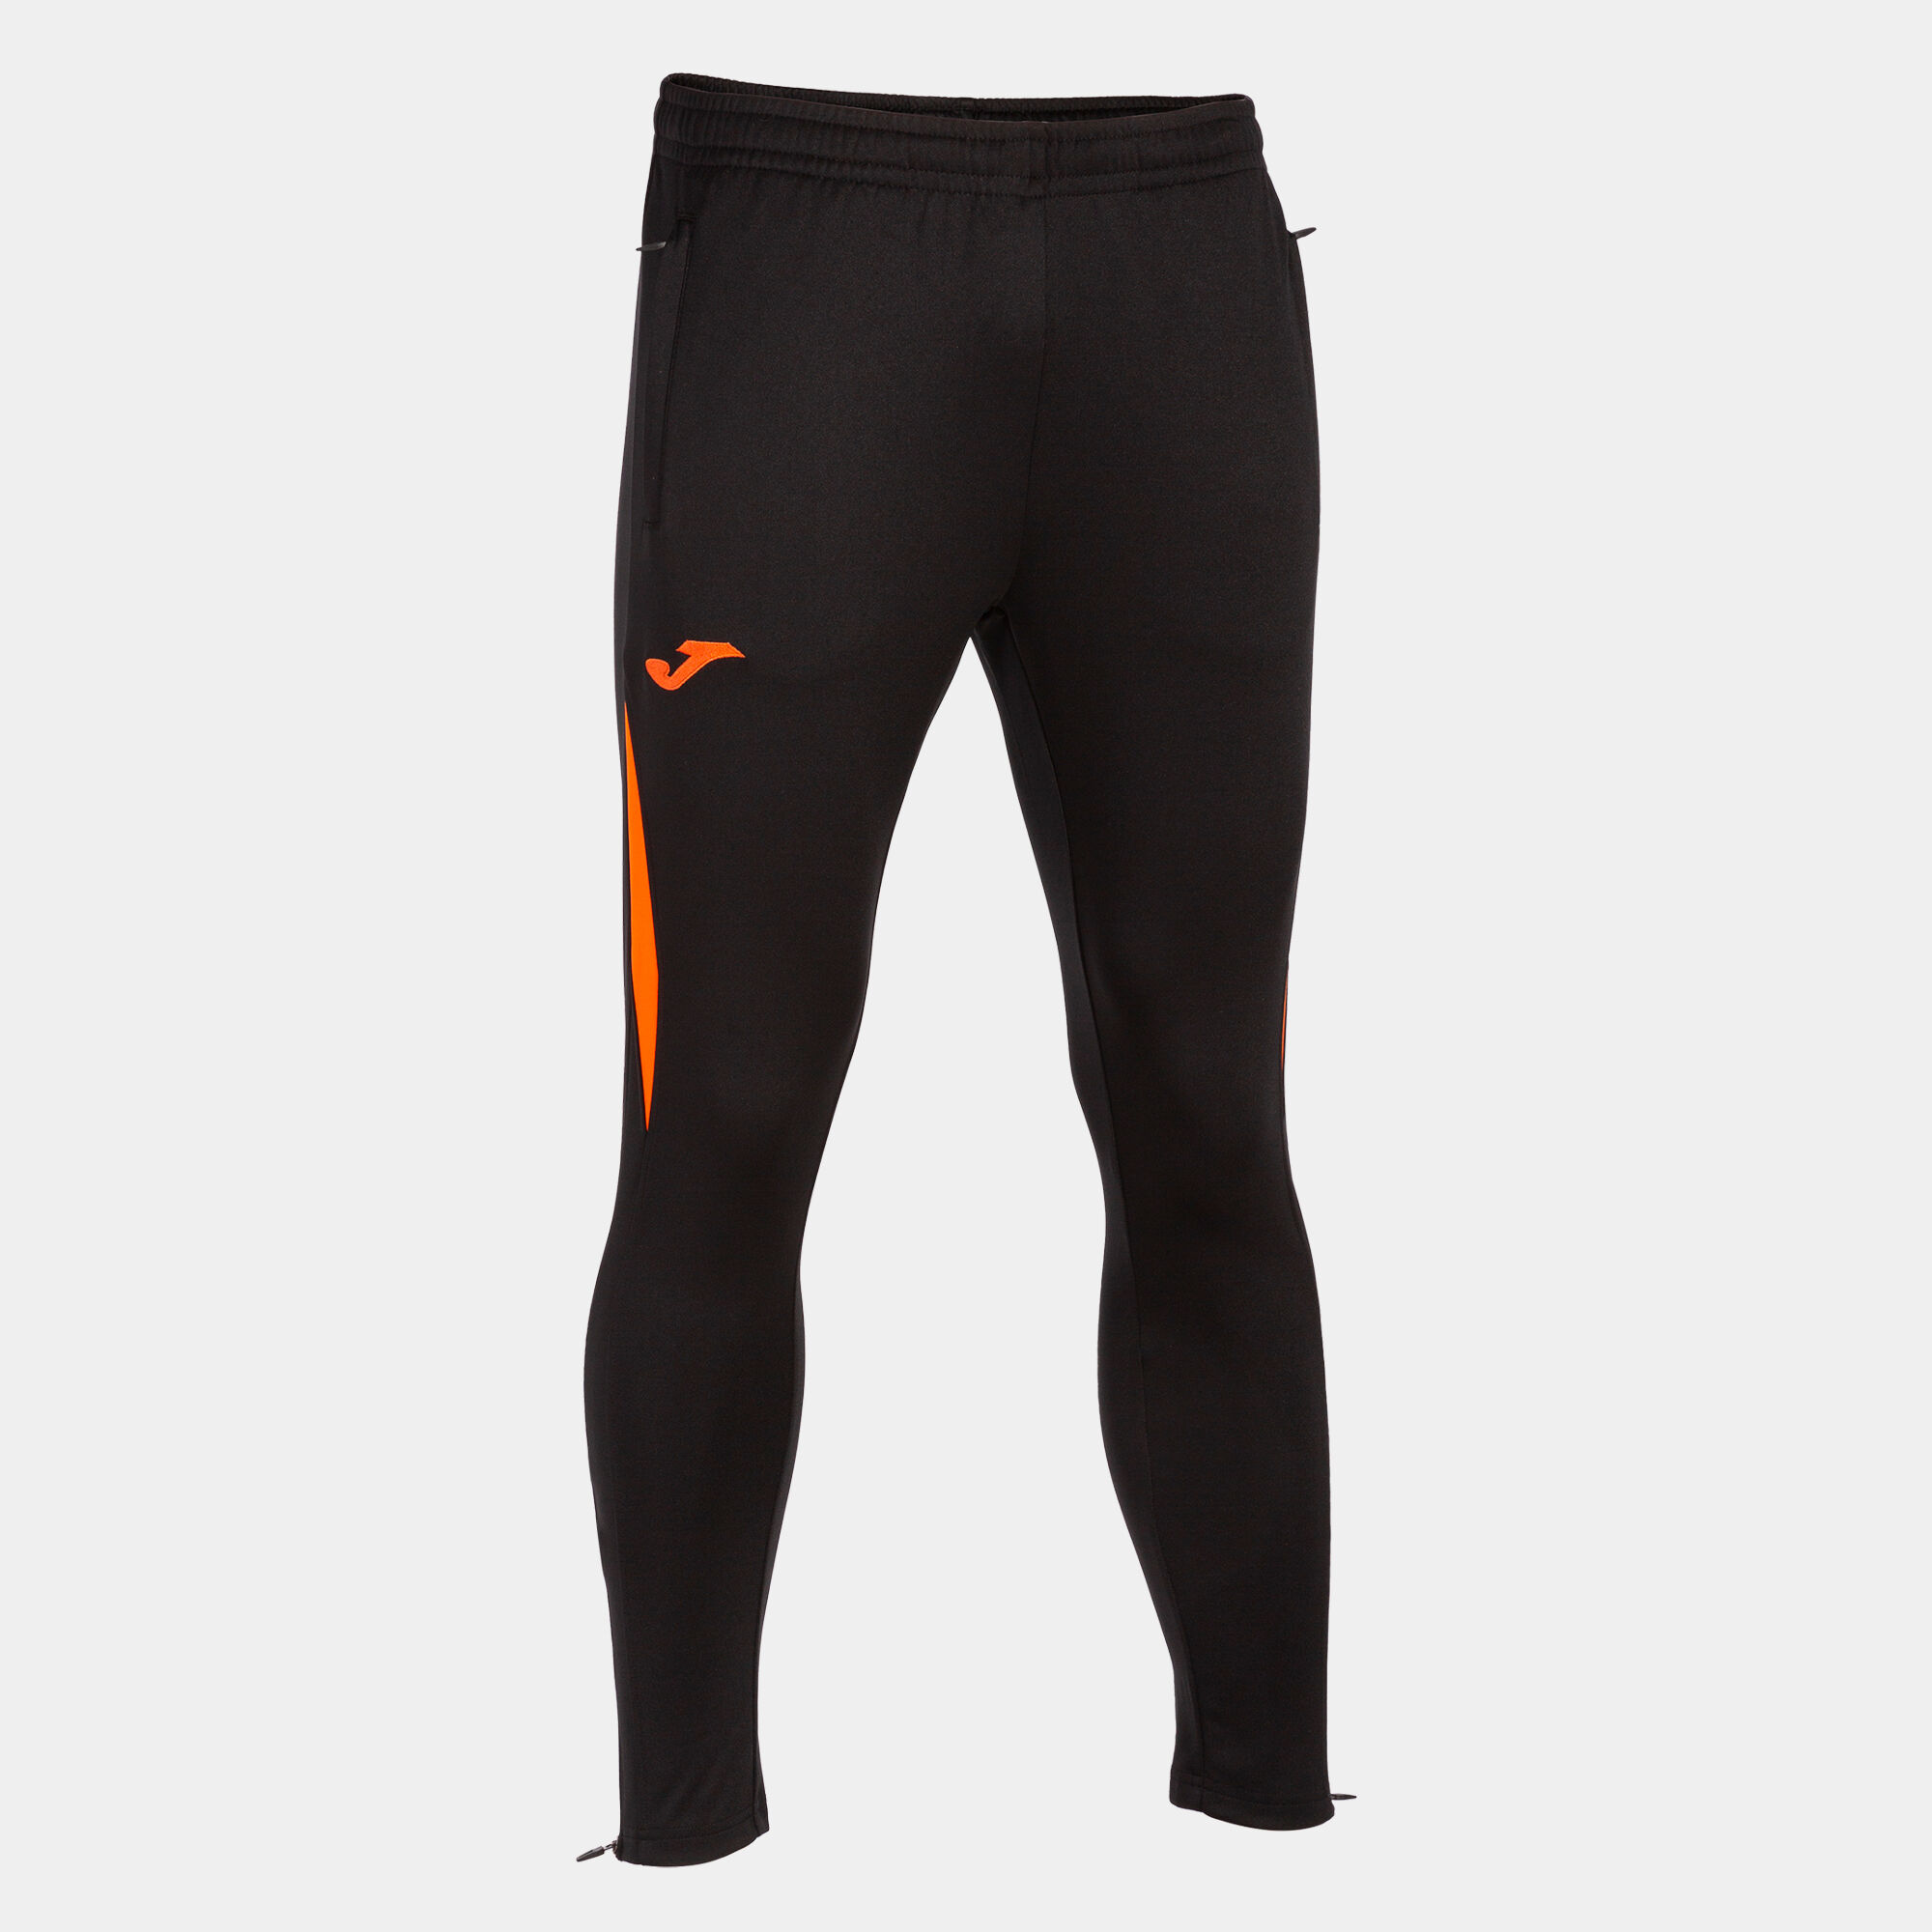 Pantalone lungo uomo Championship VII nero arancione